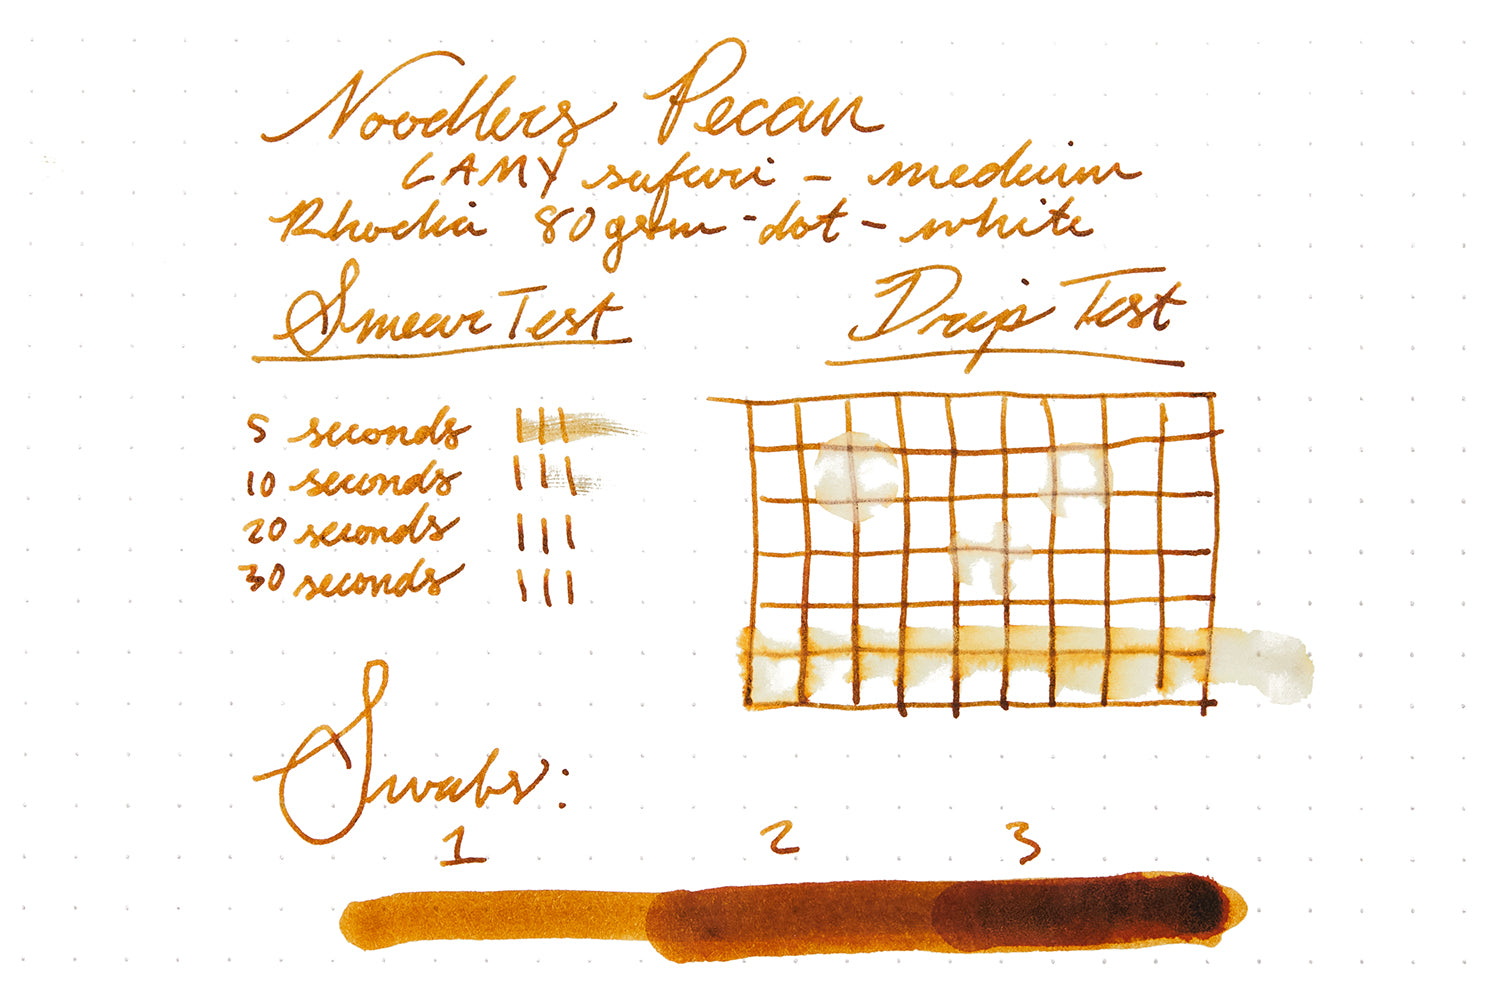 Noodler's Pecan ink writing test on Rhodia